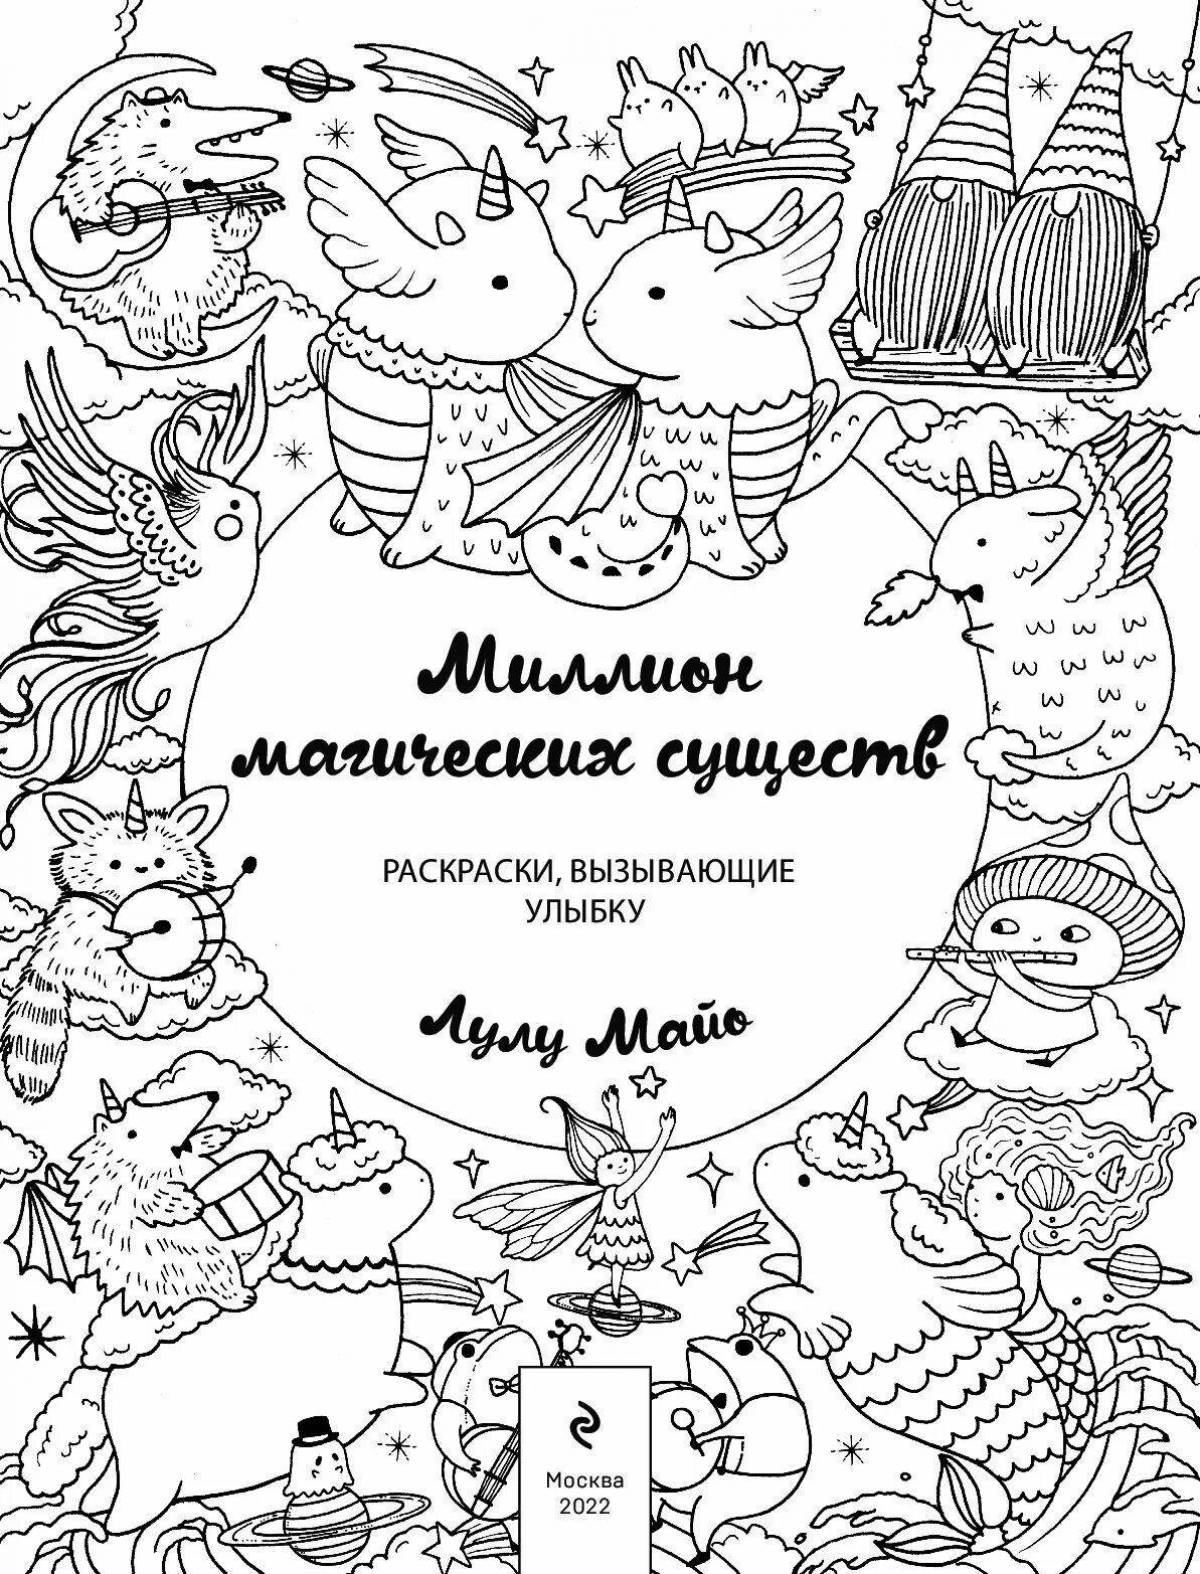 Gorgeous coloring book million mermaids lulu mayo